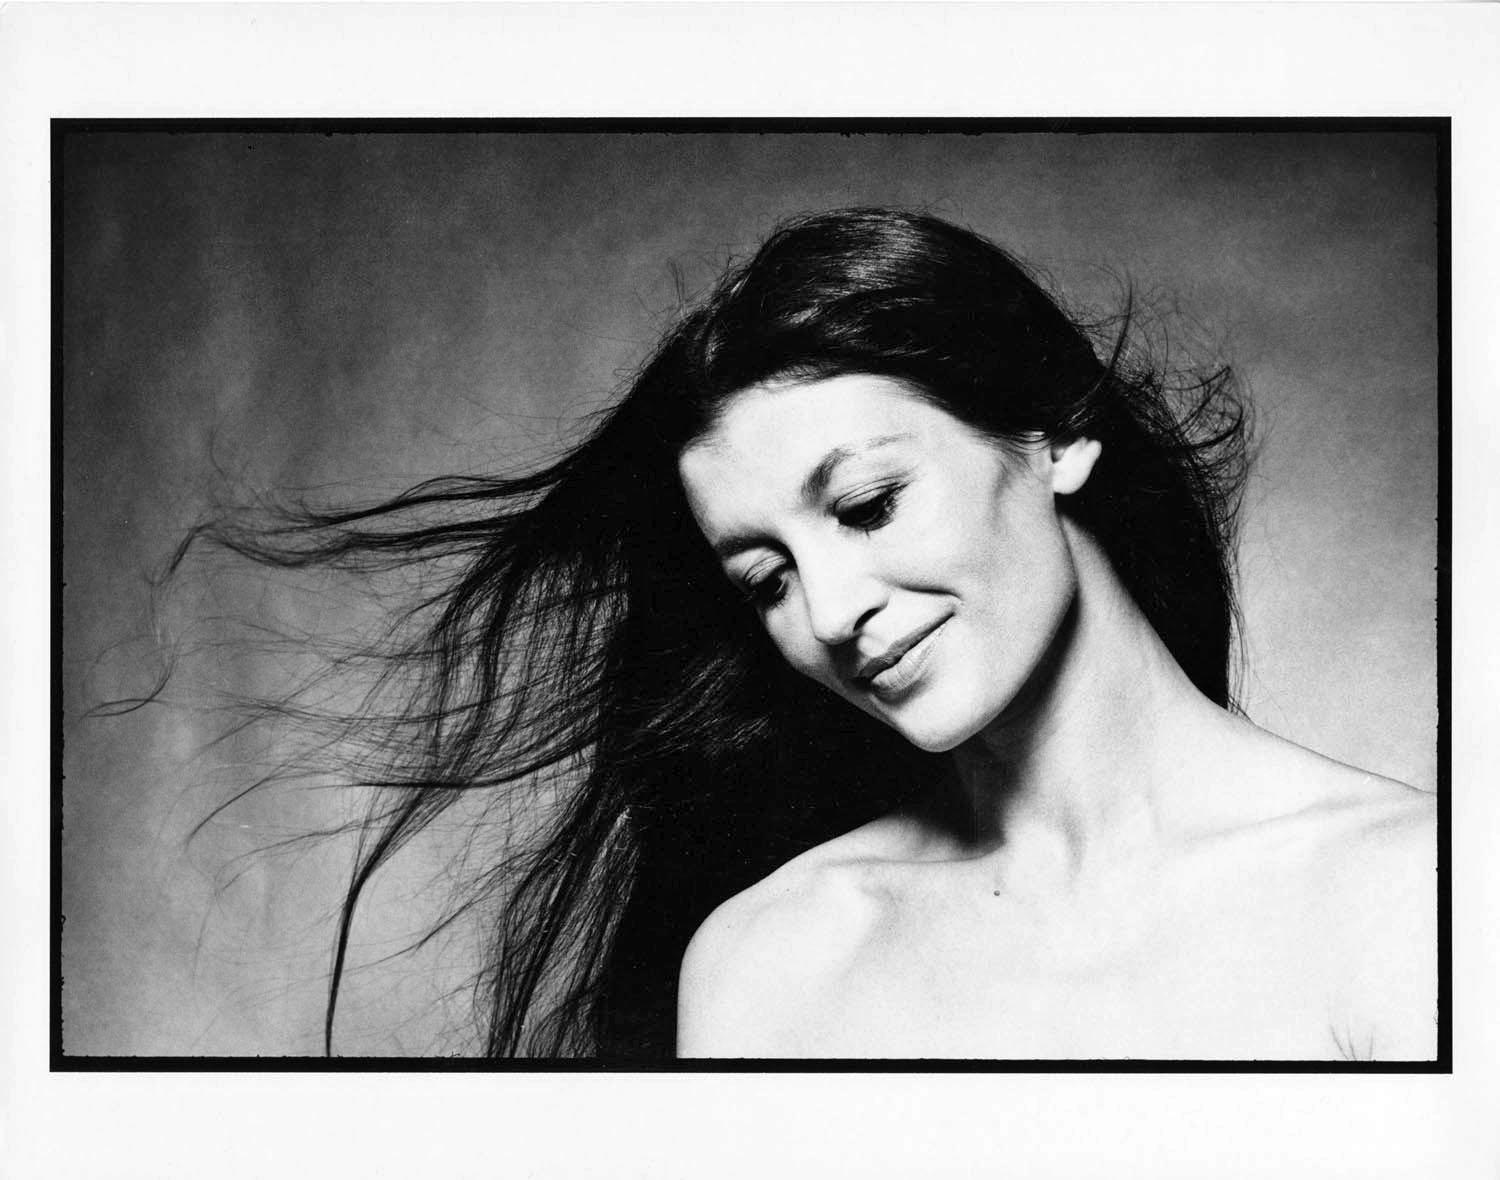 Jack Mitchell Black and White Photograph - Portrait Study of Classical Ballerina Carla Fracci